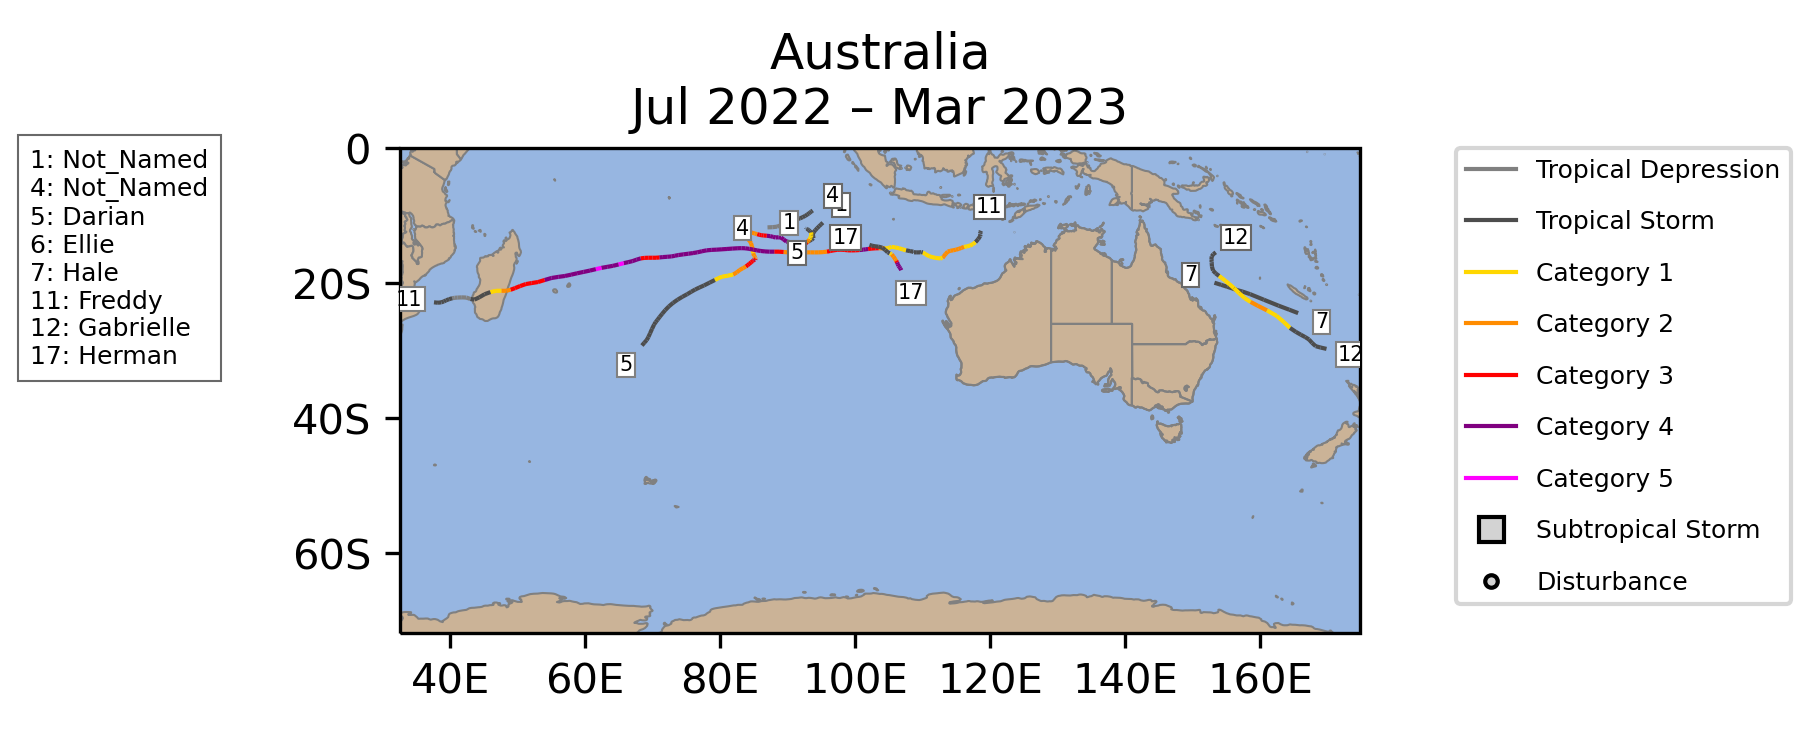 Australia Tropical Cyclone Storm Tracks July 2022-March 2023